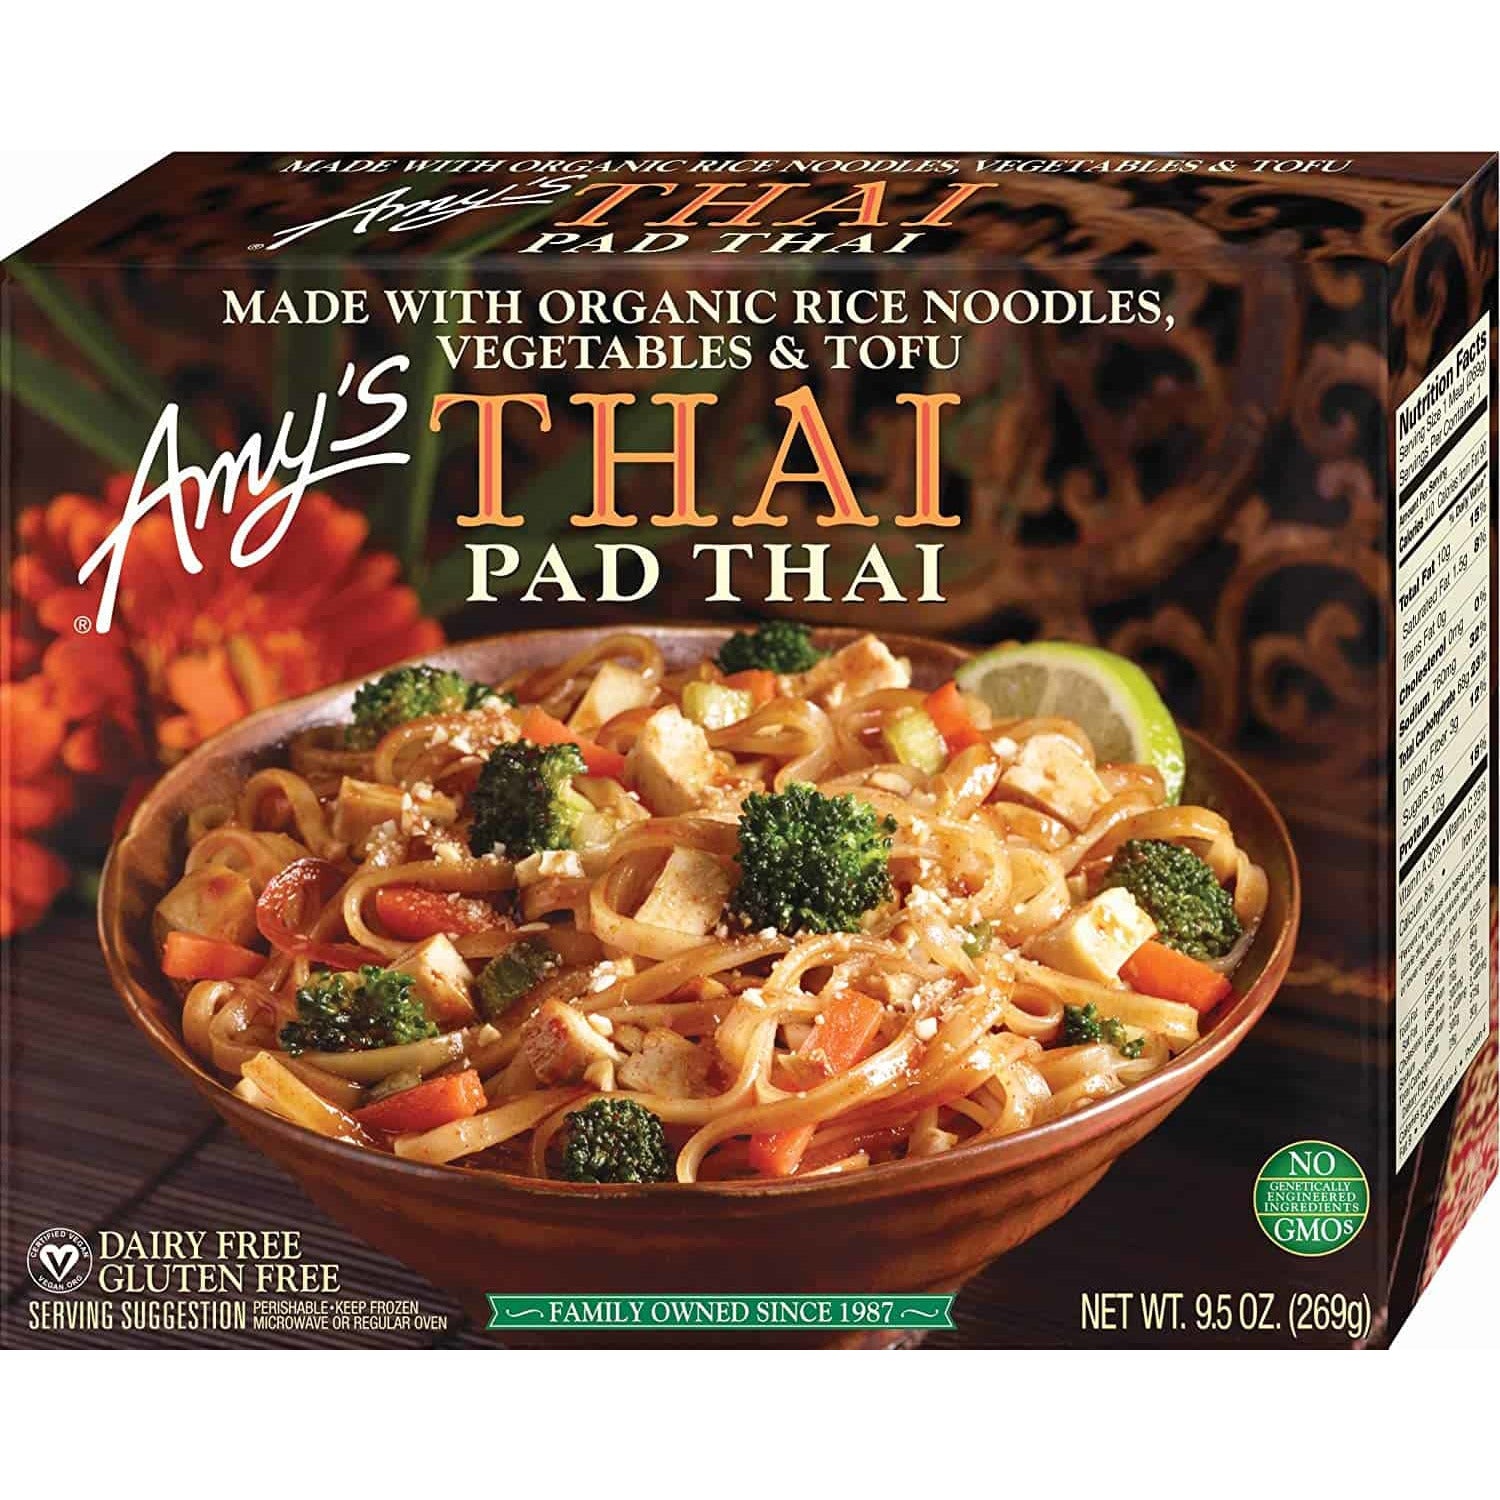 Amy's Pad Thai, Vegetables & Tofu, Non GMO, 9.5-Ounce